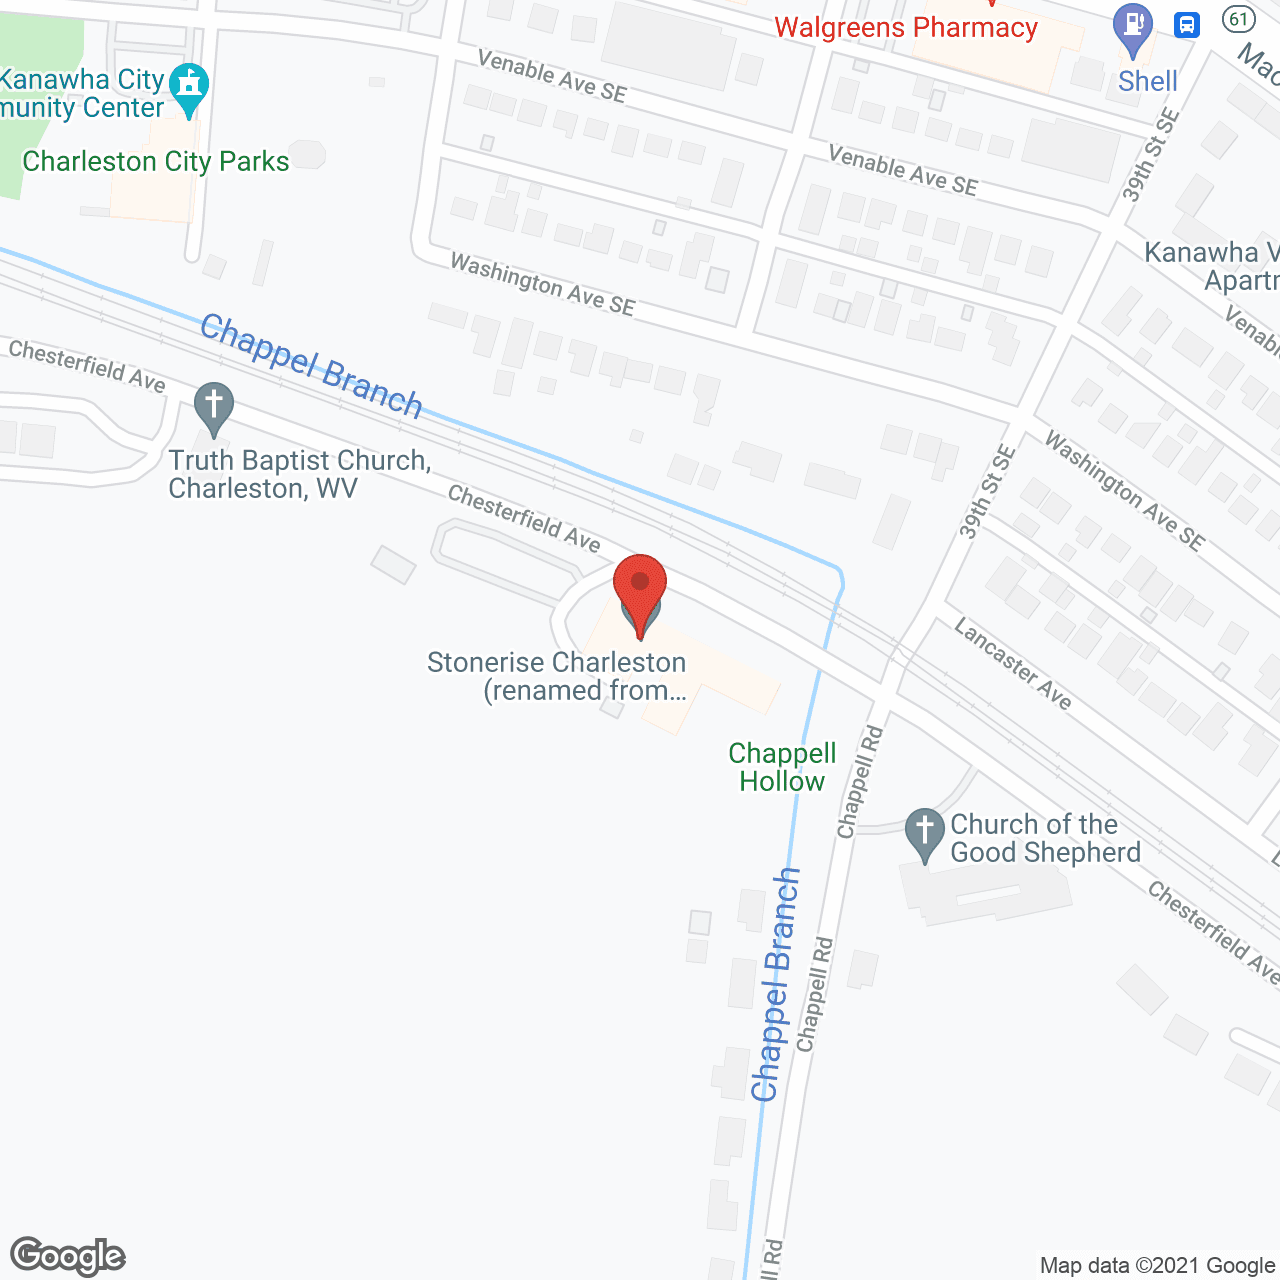 Stonerise Charleston in google map